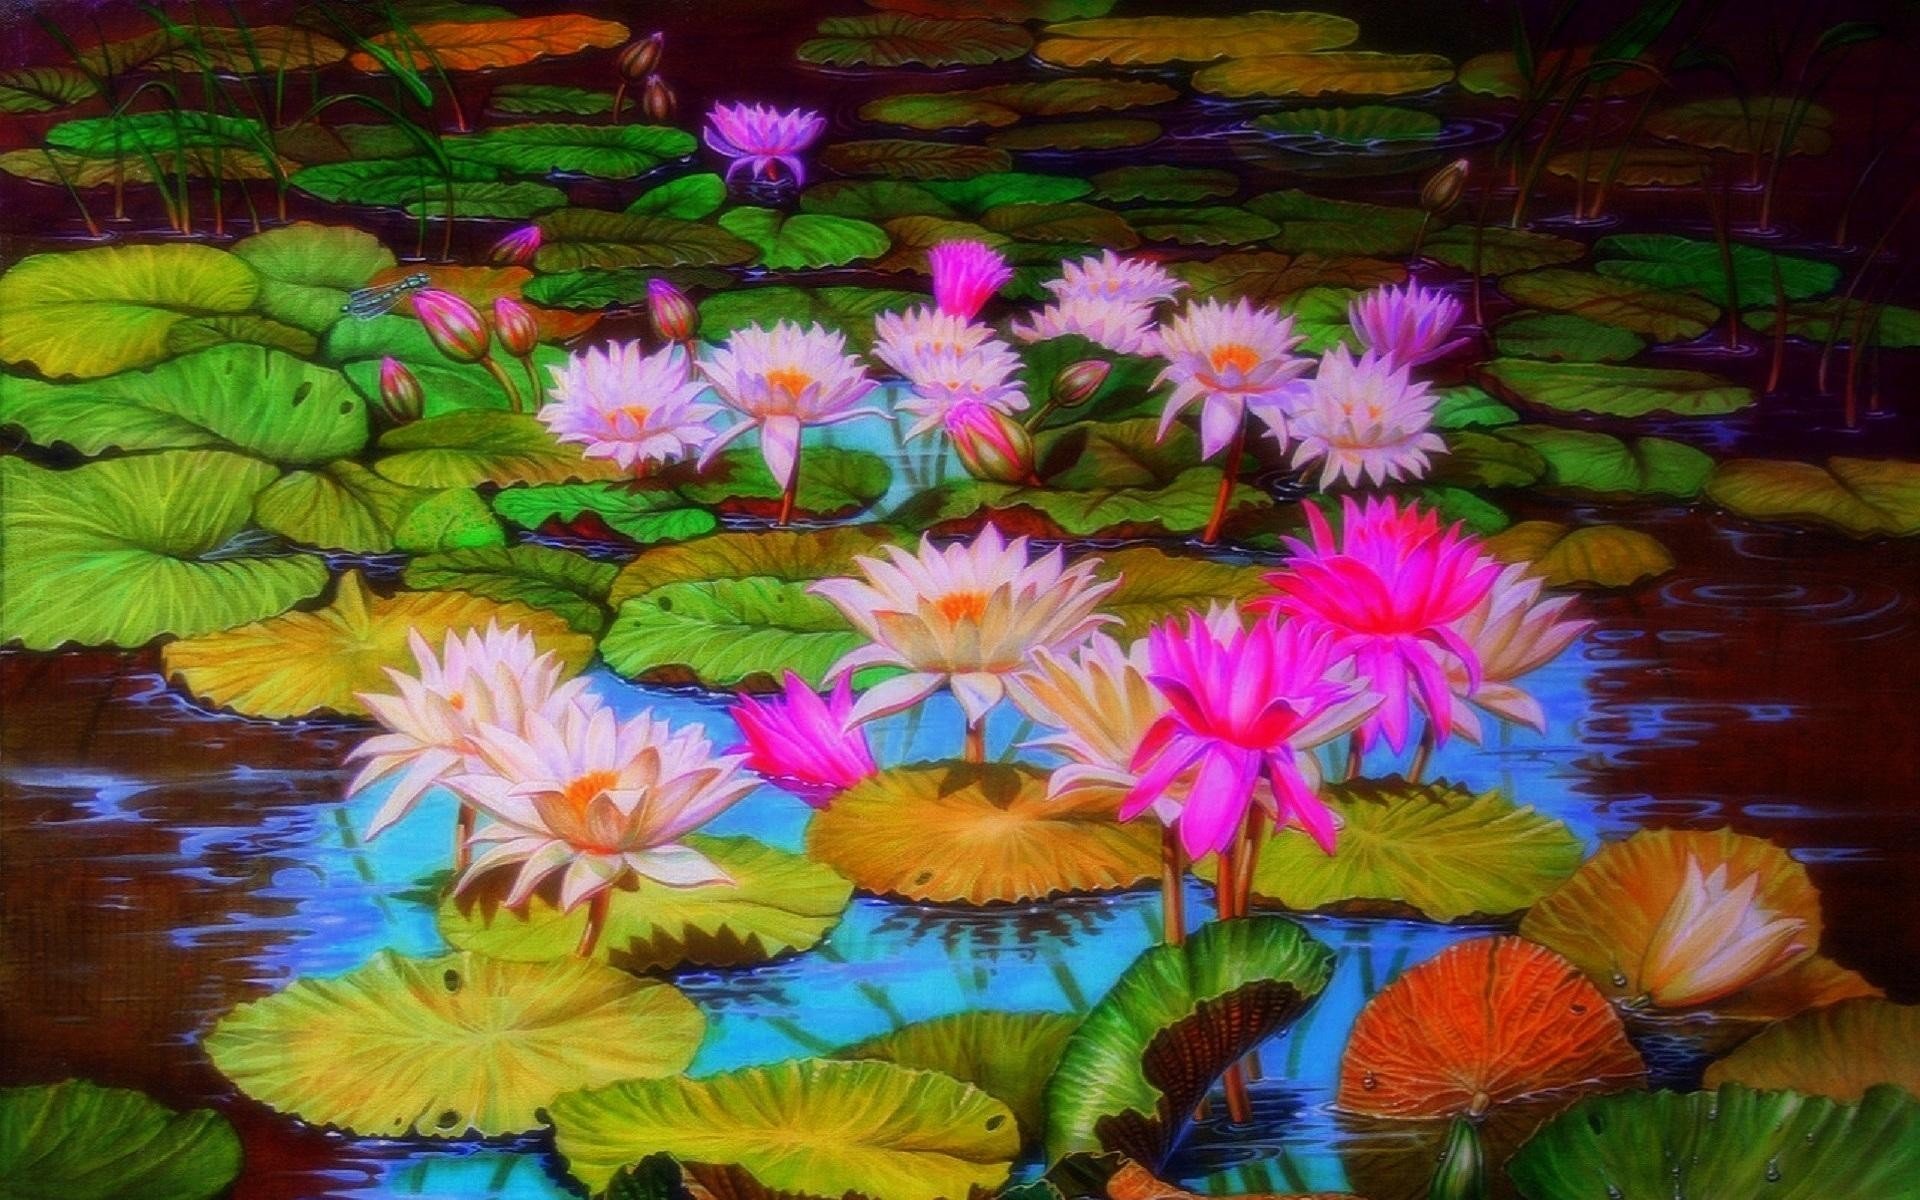 Pond with Lotus Flowers